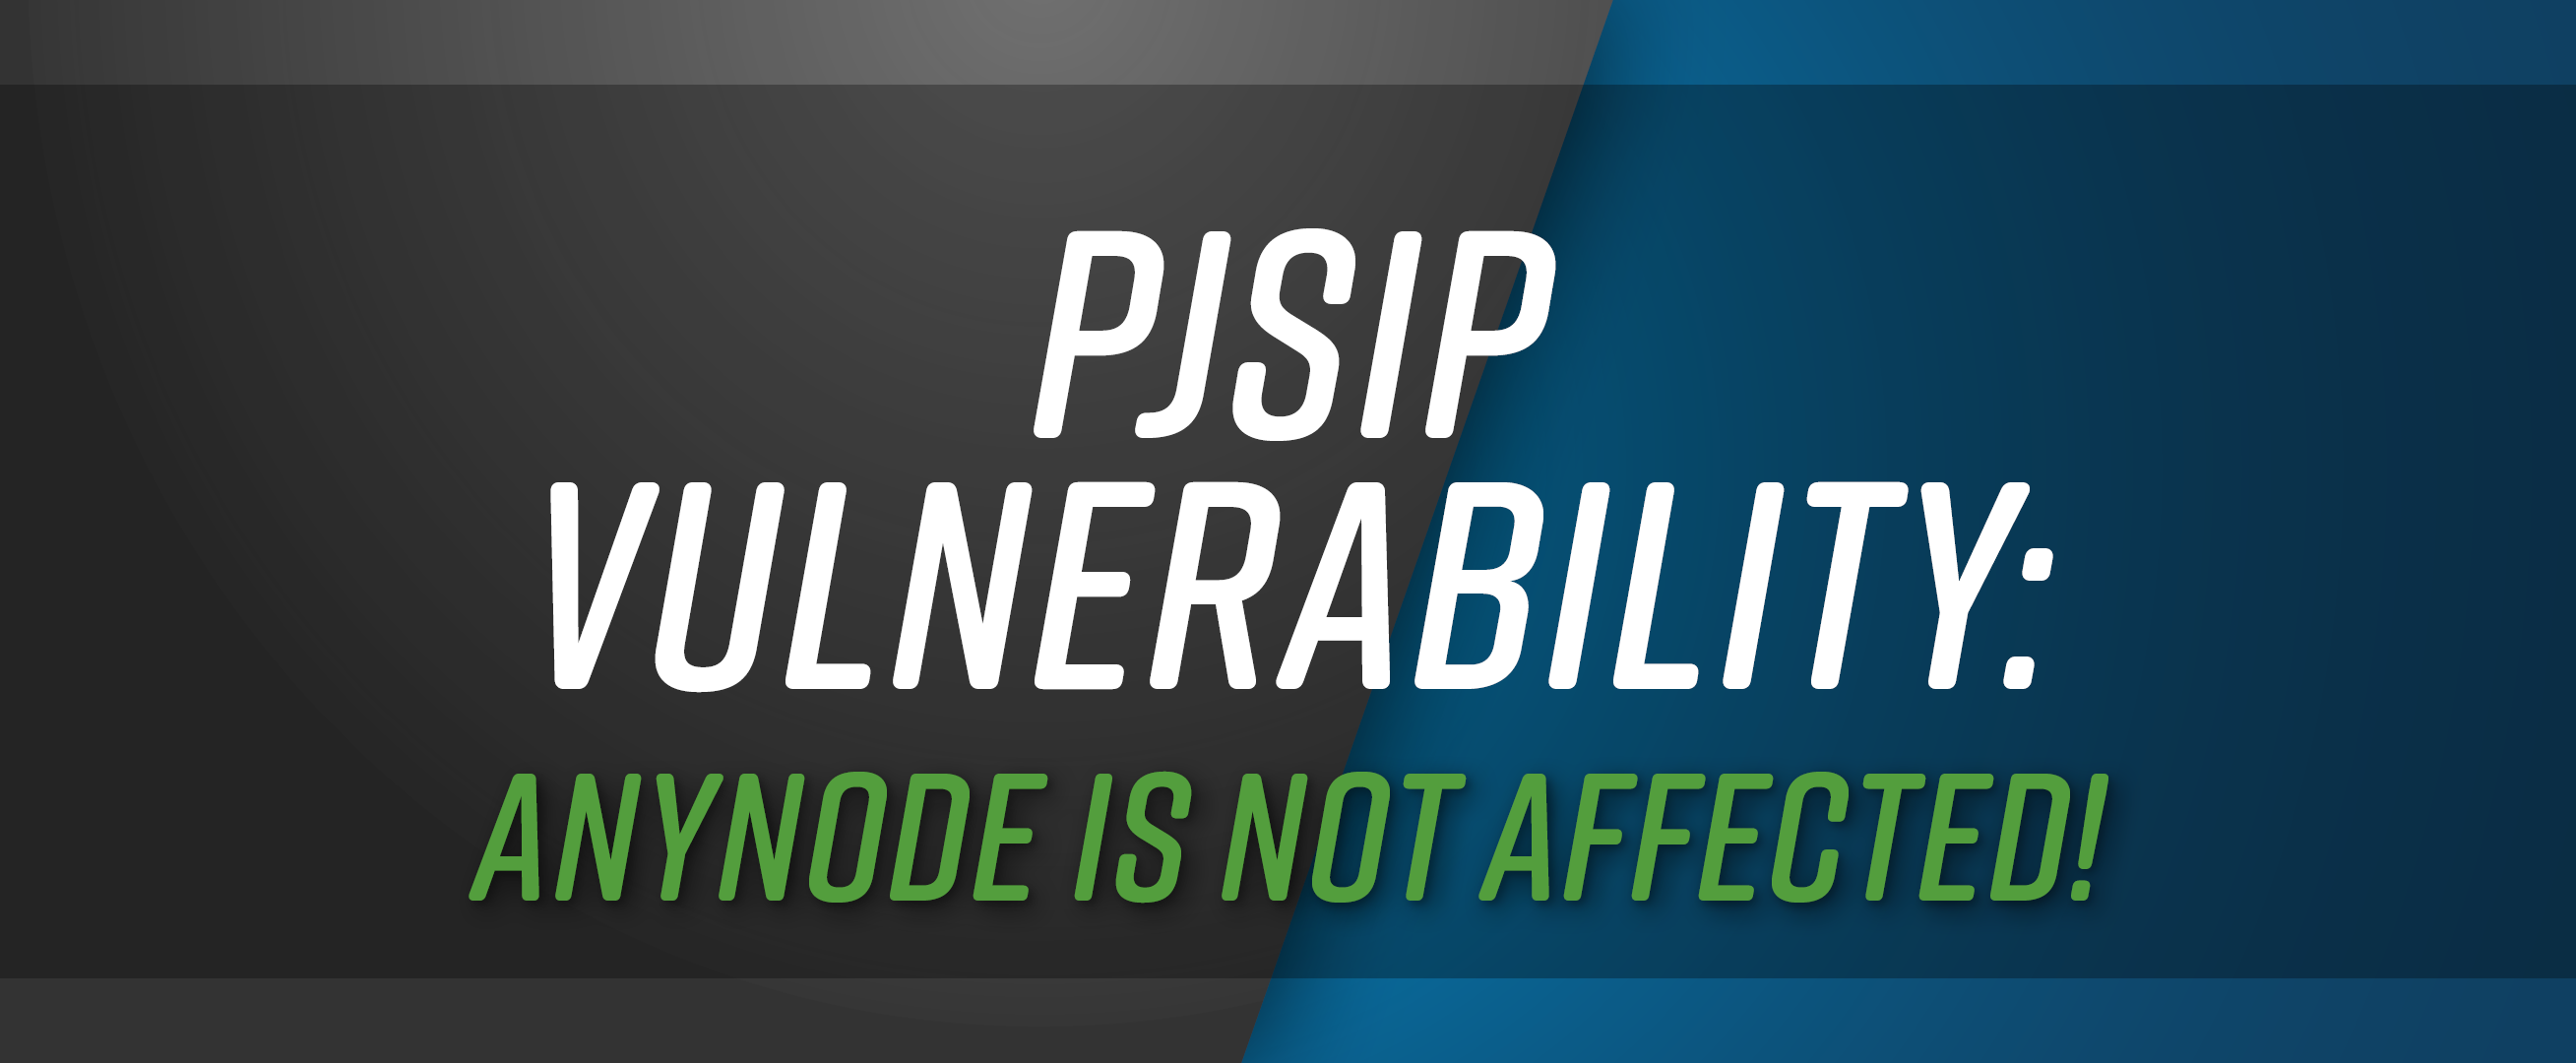 No anynode PJSIP vulnerability